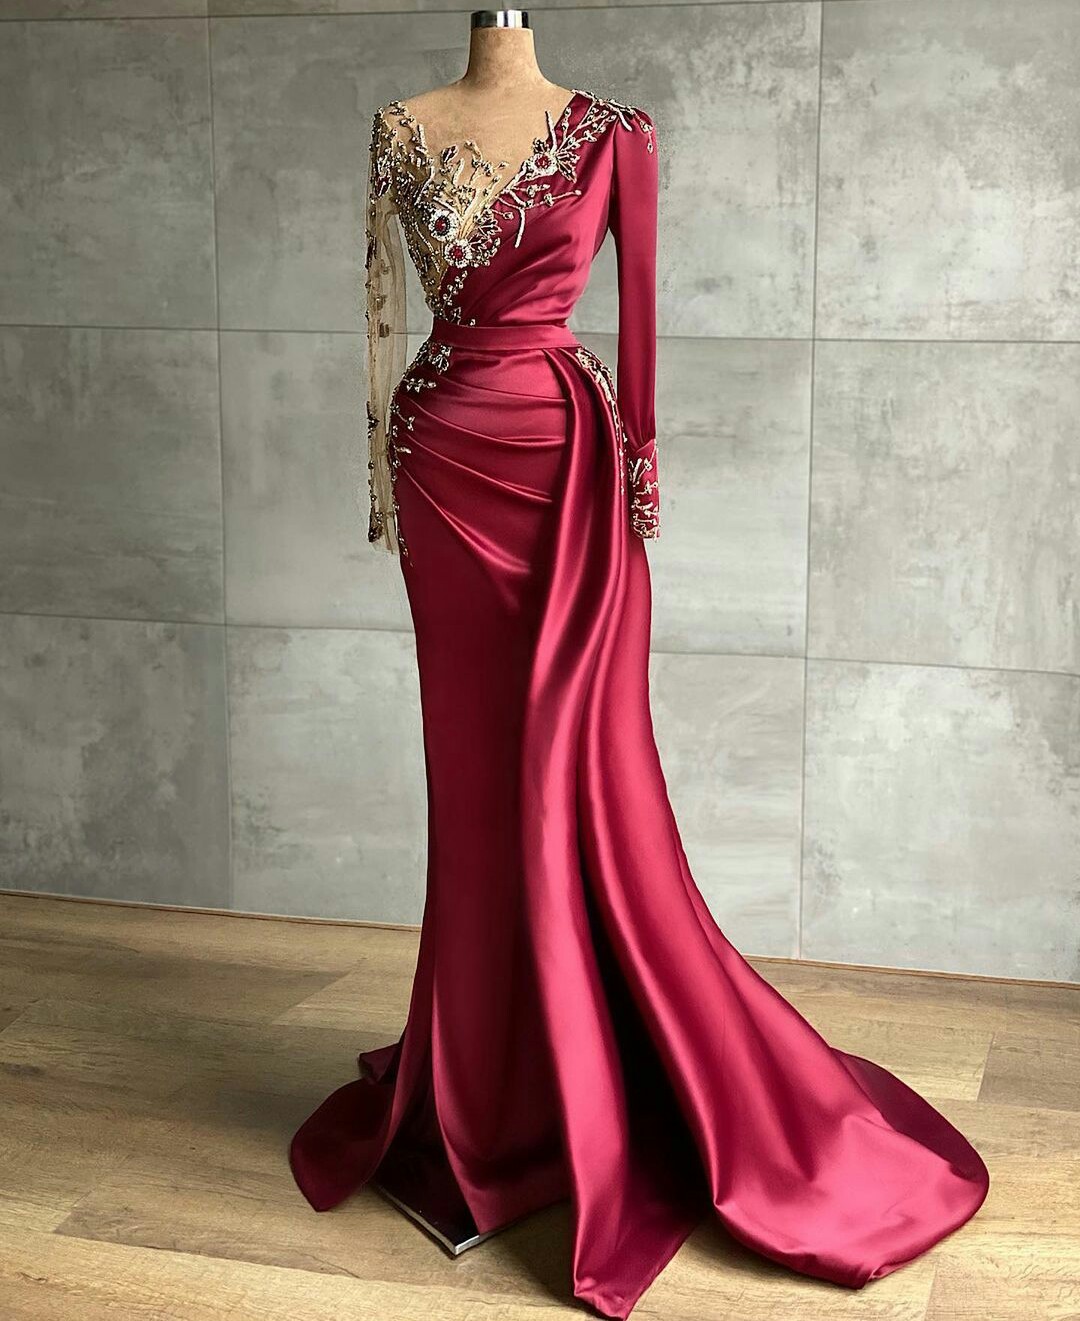 Red Prom Dresses, 2022 Prom Dresses, Prom Dresses, Detachable Skirt Prom Dresses, Evening Dresses, Custom Make Evening Gowns, Fashion Prom